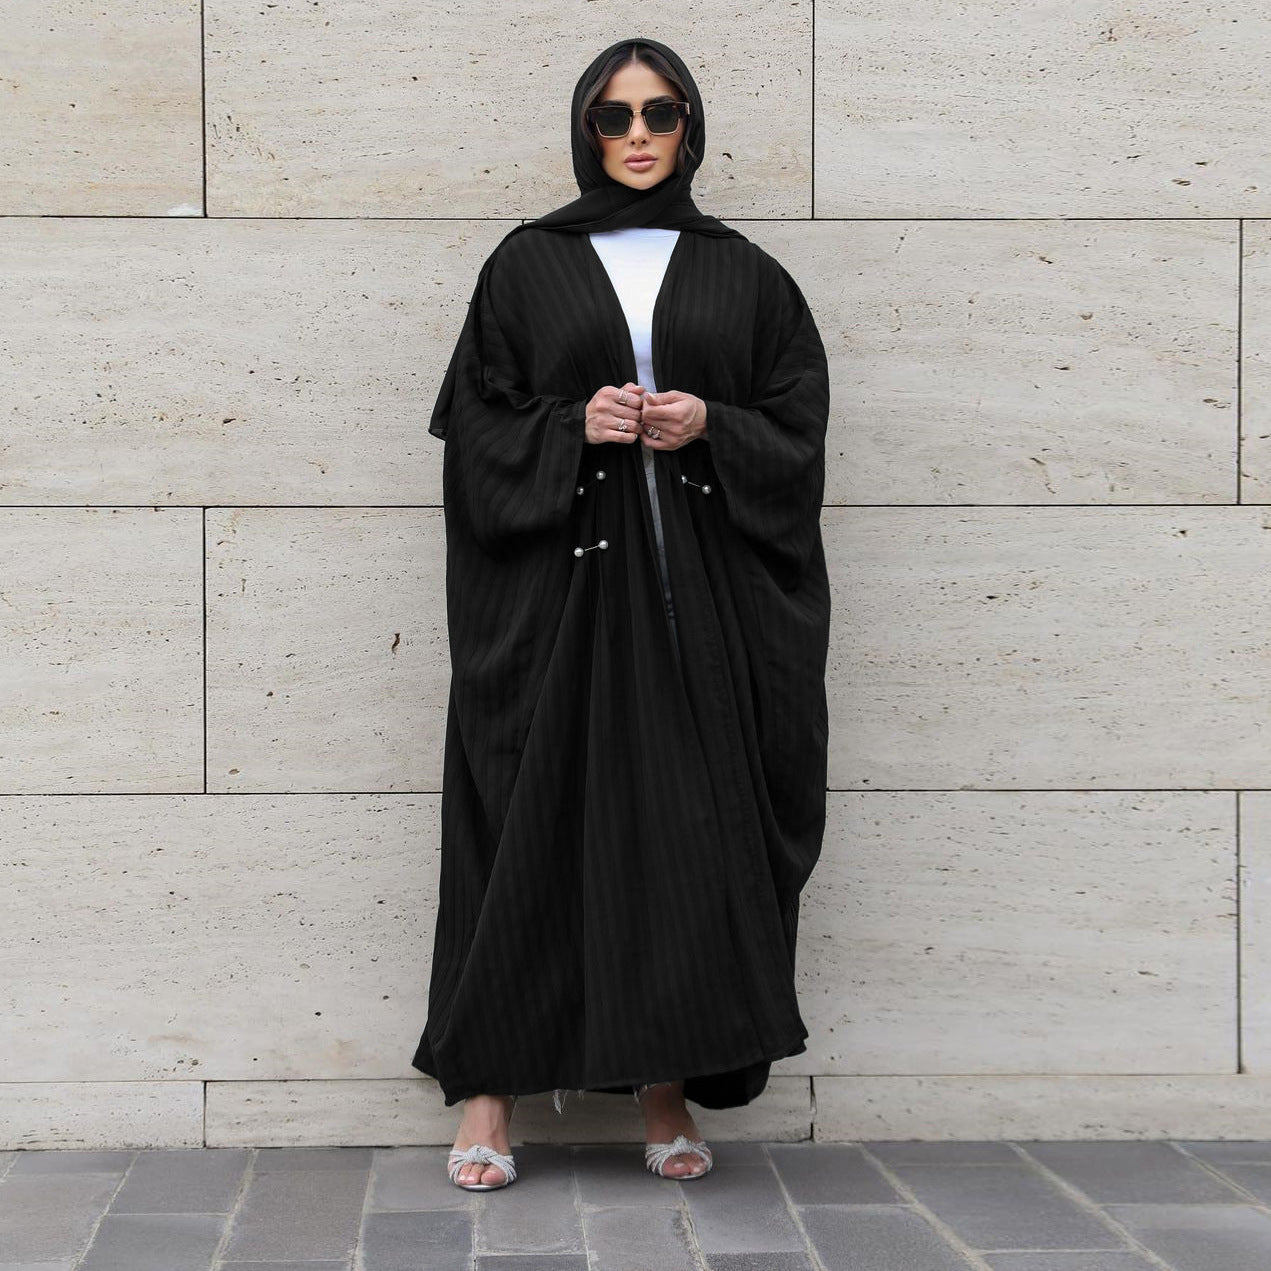 Women's Striped Casual Robe Open Abaya